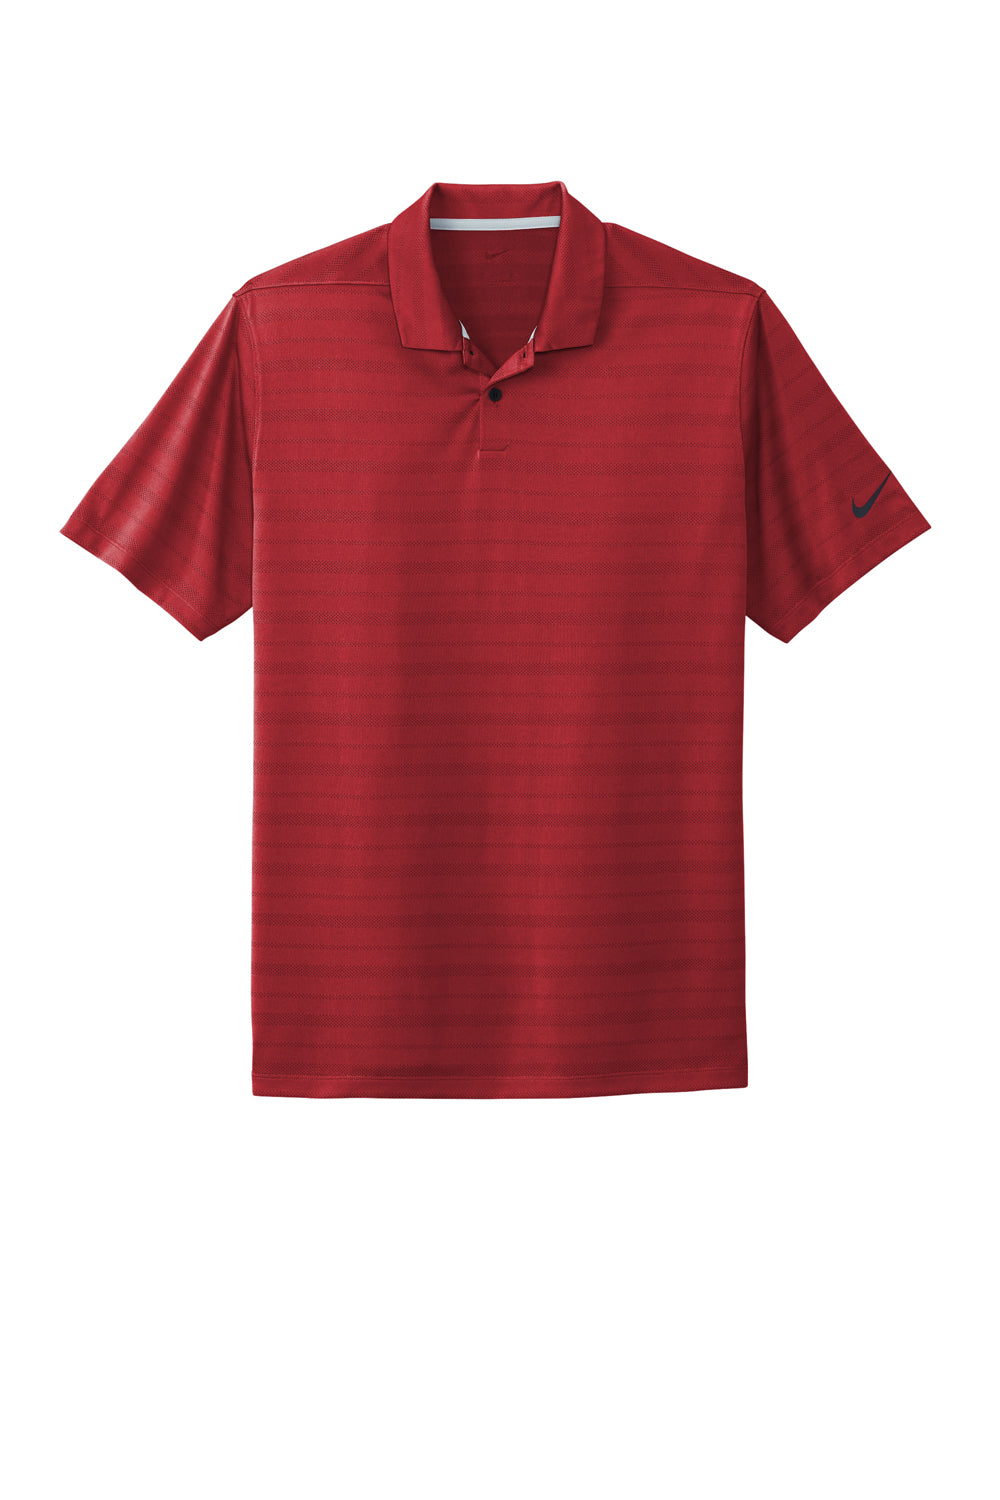 Nike NKDC2115 Mens Vapor Jacquard Dri-Fit Moisture Wicking Short Sleeve Polo Shirt Team Red Flat Front